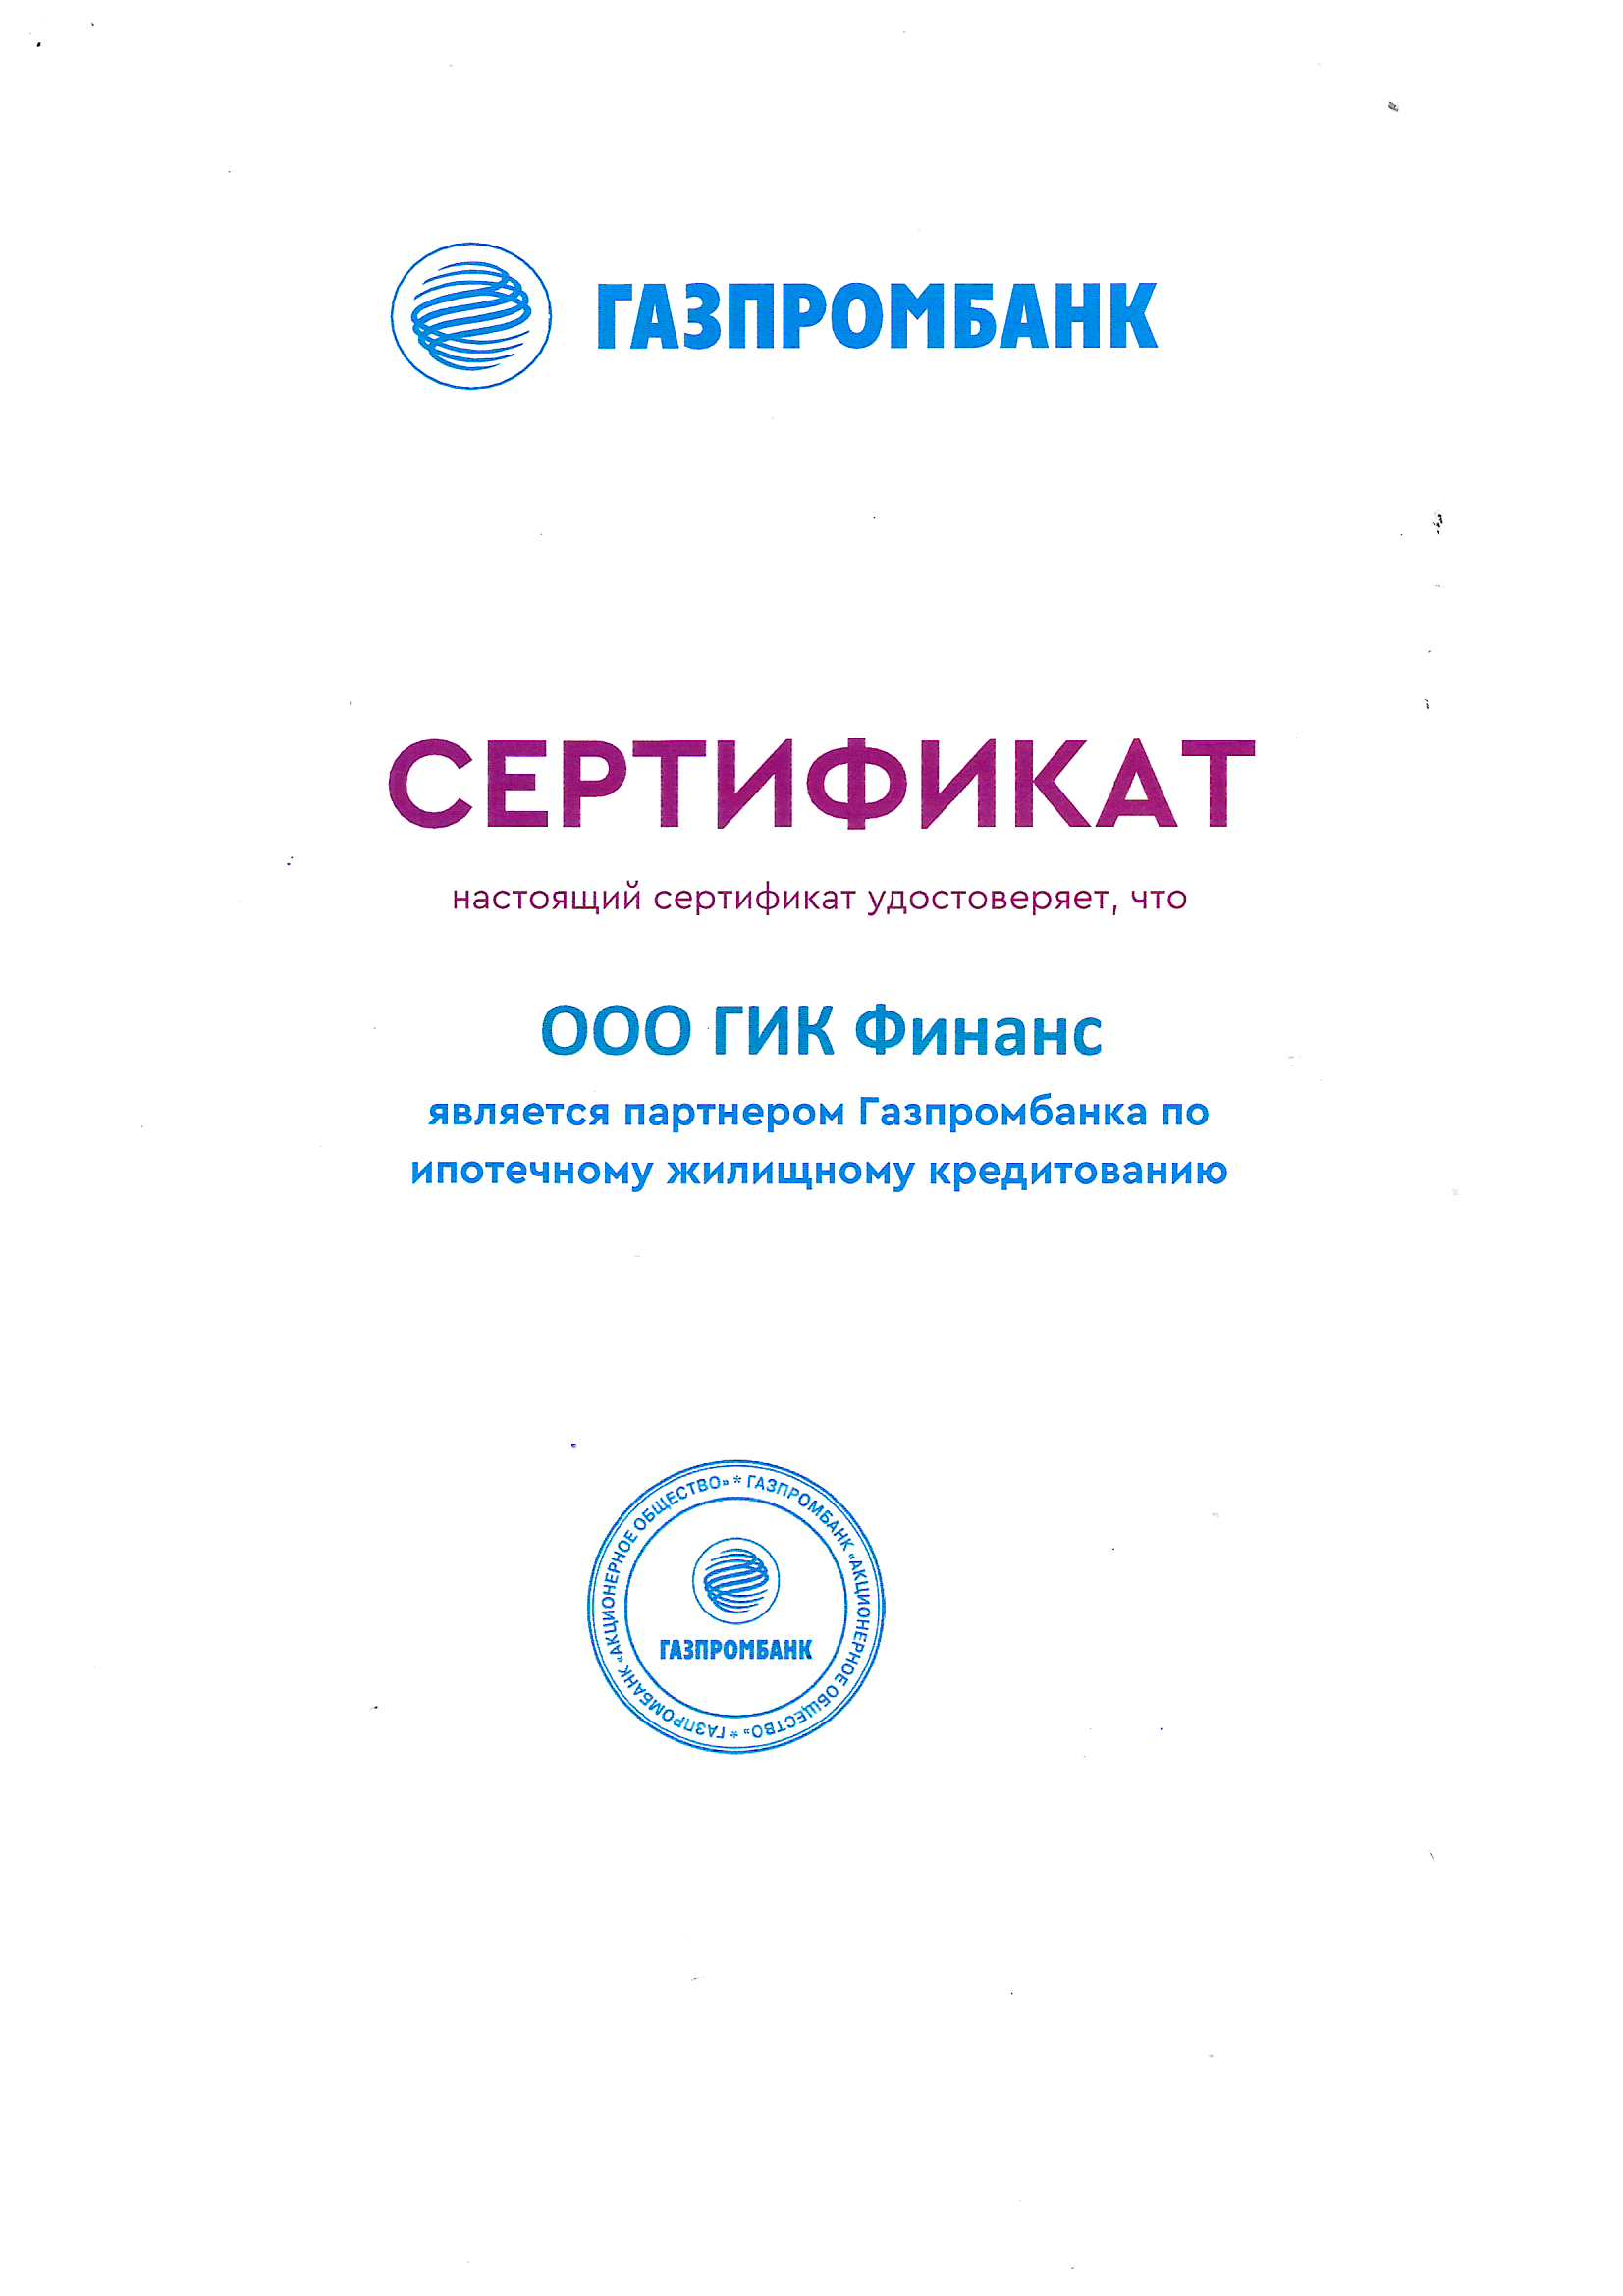 Сертификат о сотрудничестве с АО "Газпромбанк"